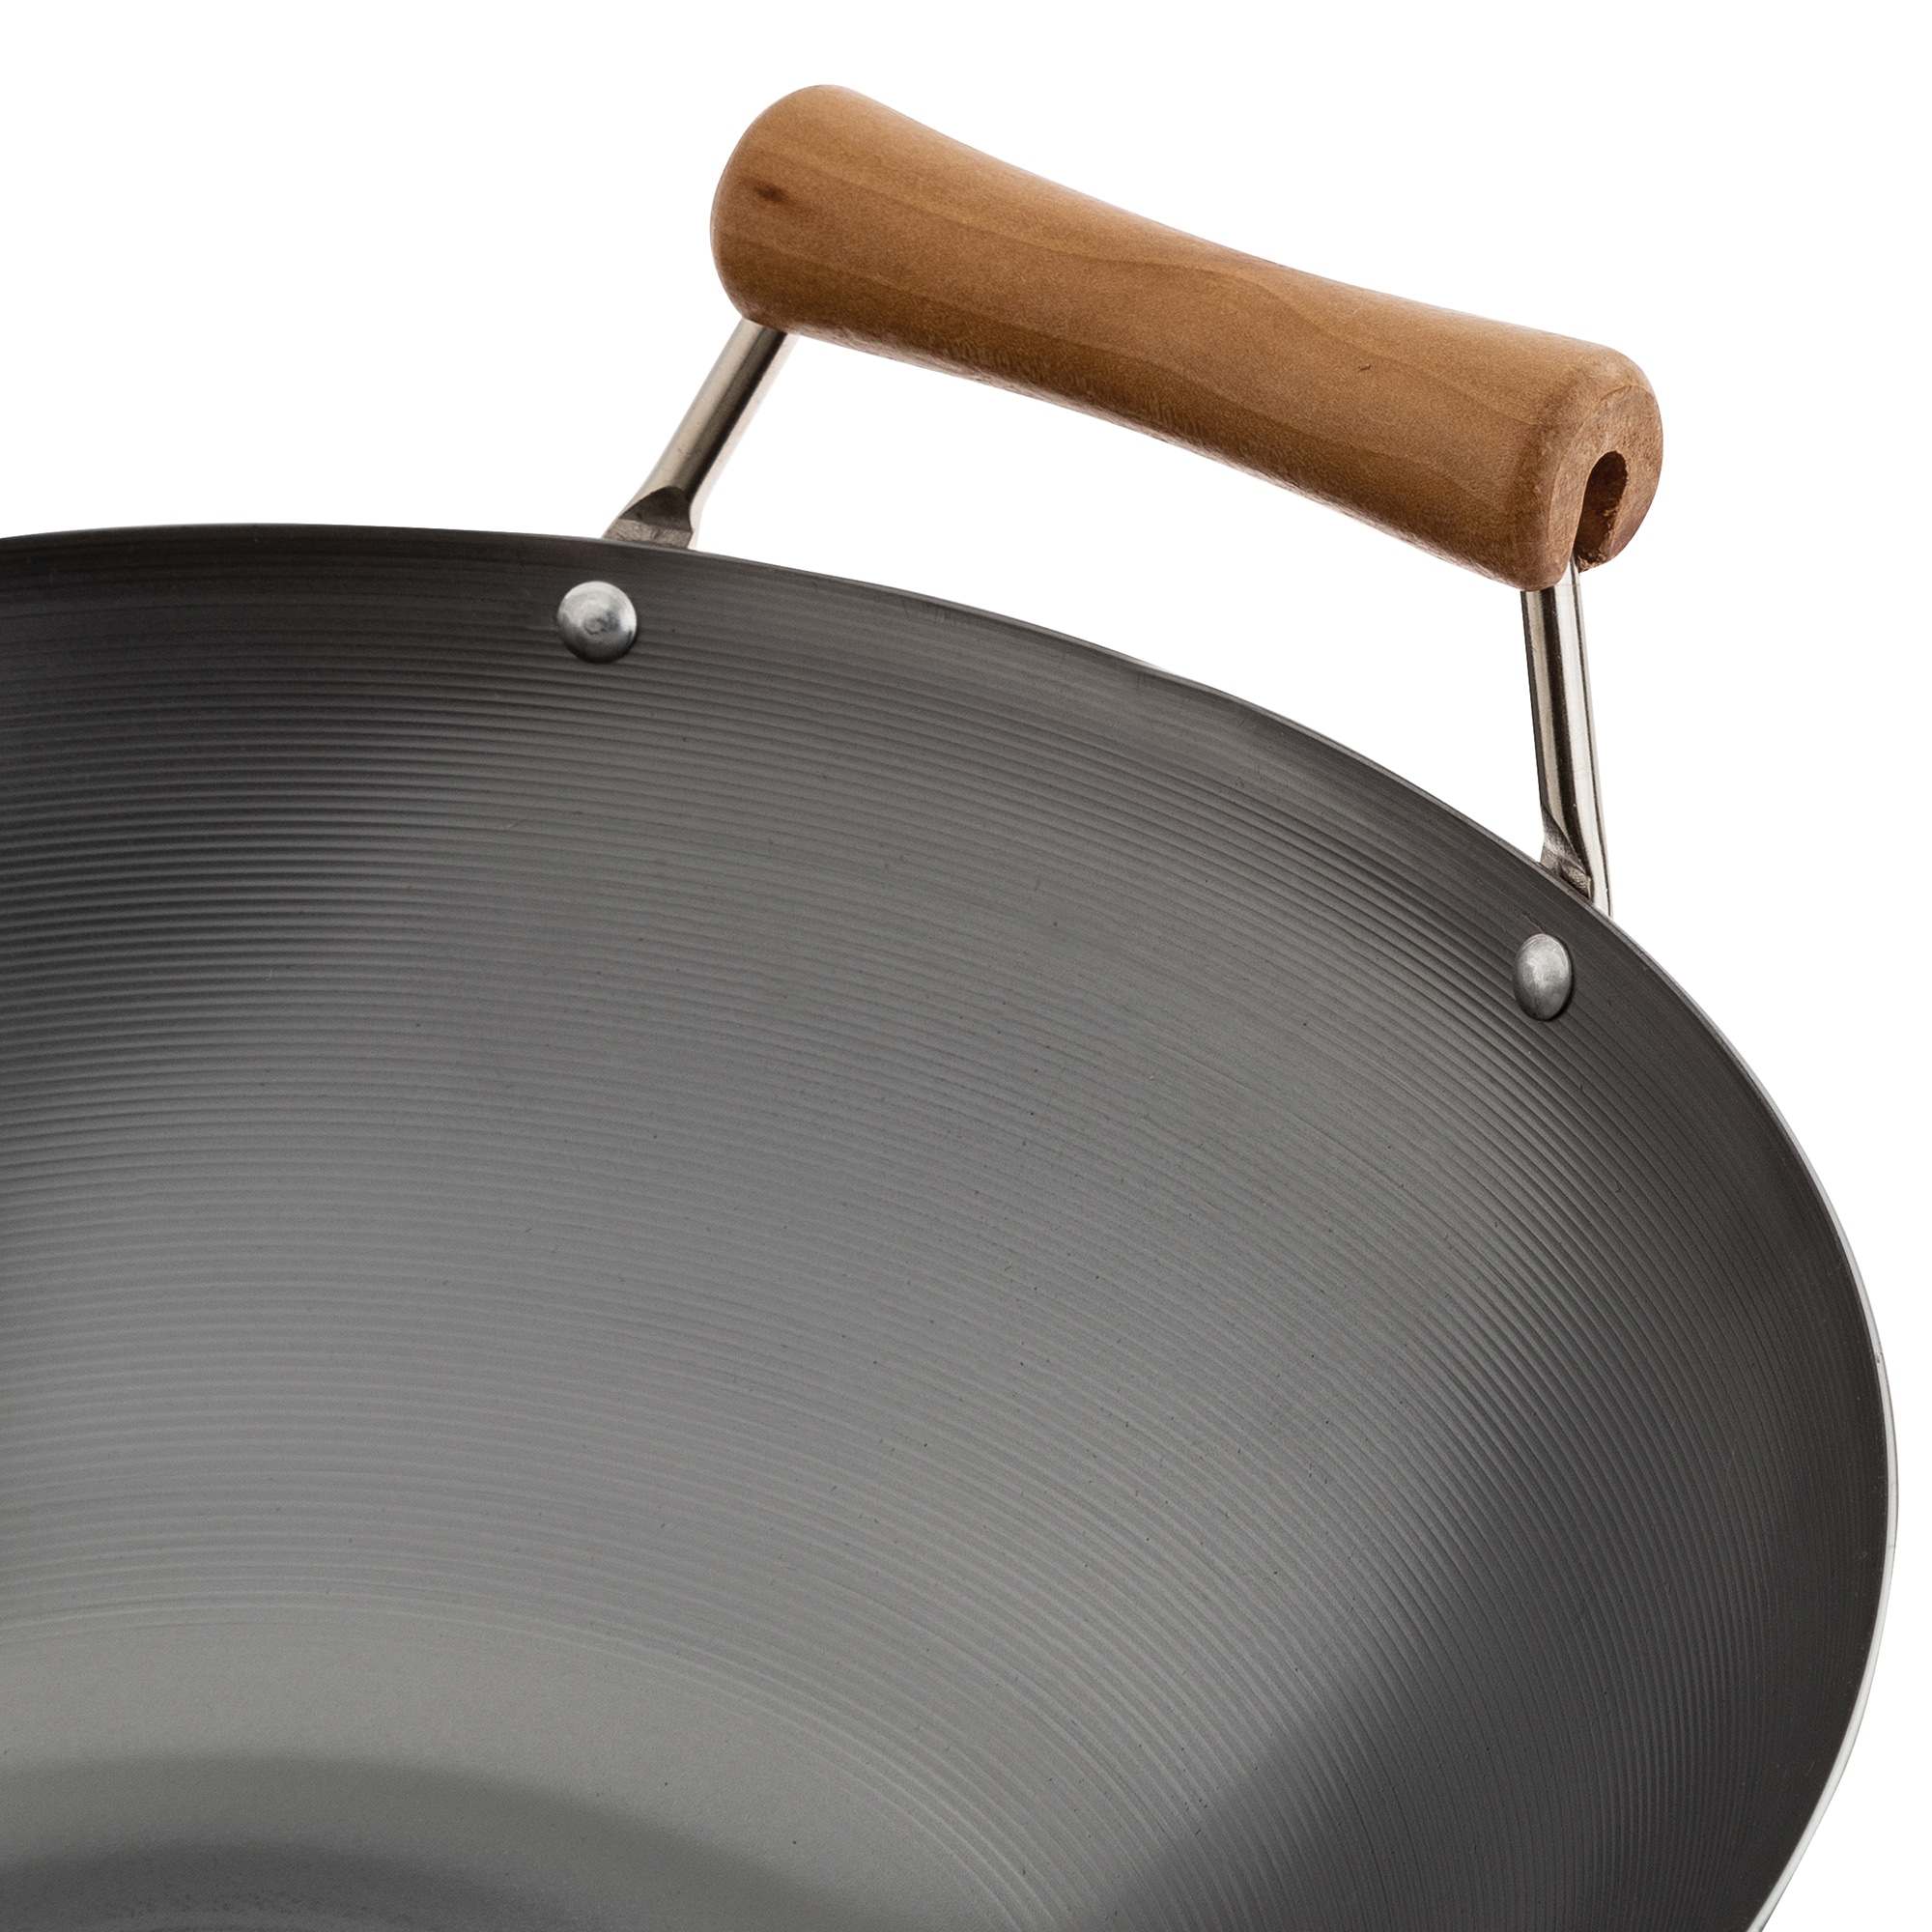 Large wok advice? : r/carbonsteel